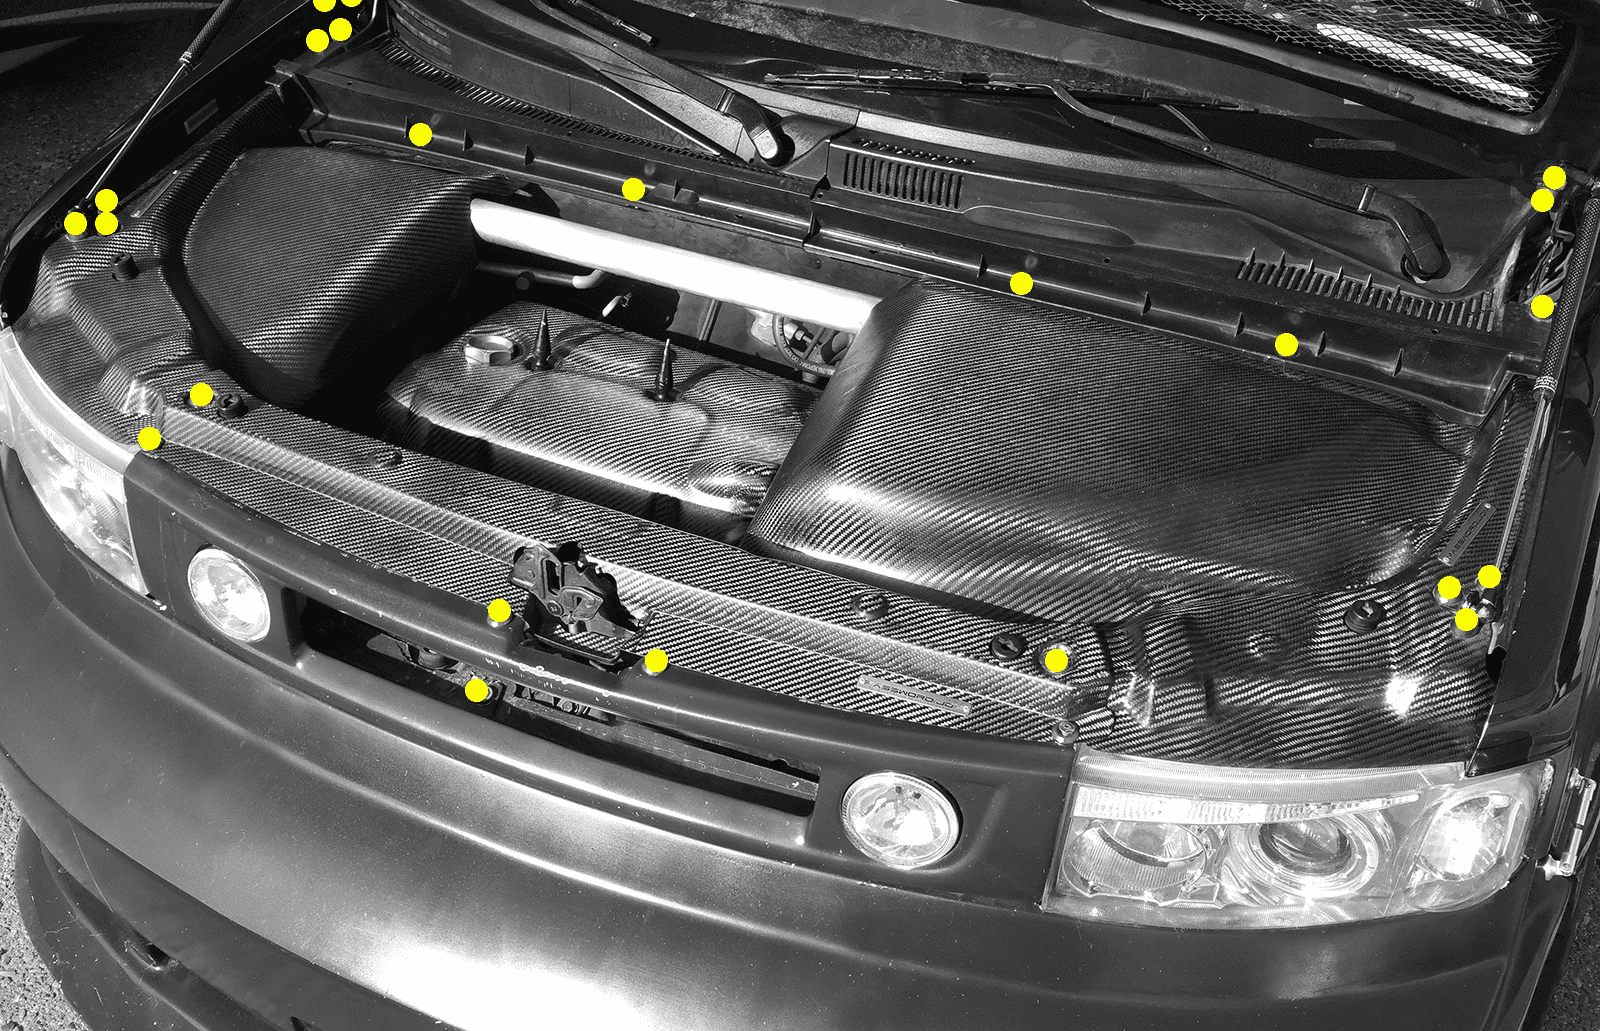 ZSPEC "Stage 3" Dress Up Bolts® Fastener Kit for '03-15 Scion xB, Titanium & Billet  Keywords Scion Toyota Grade-5 GR5 Vehicle Car Engine Bay Performance Upgrade Car Show Ready Modify Clean